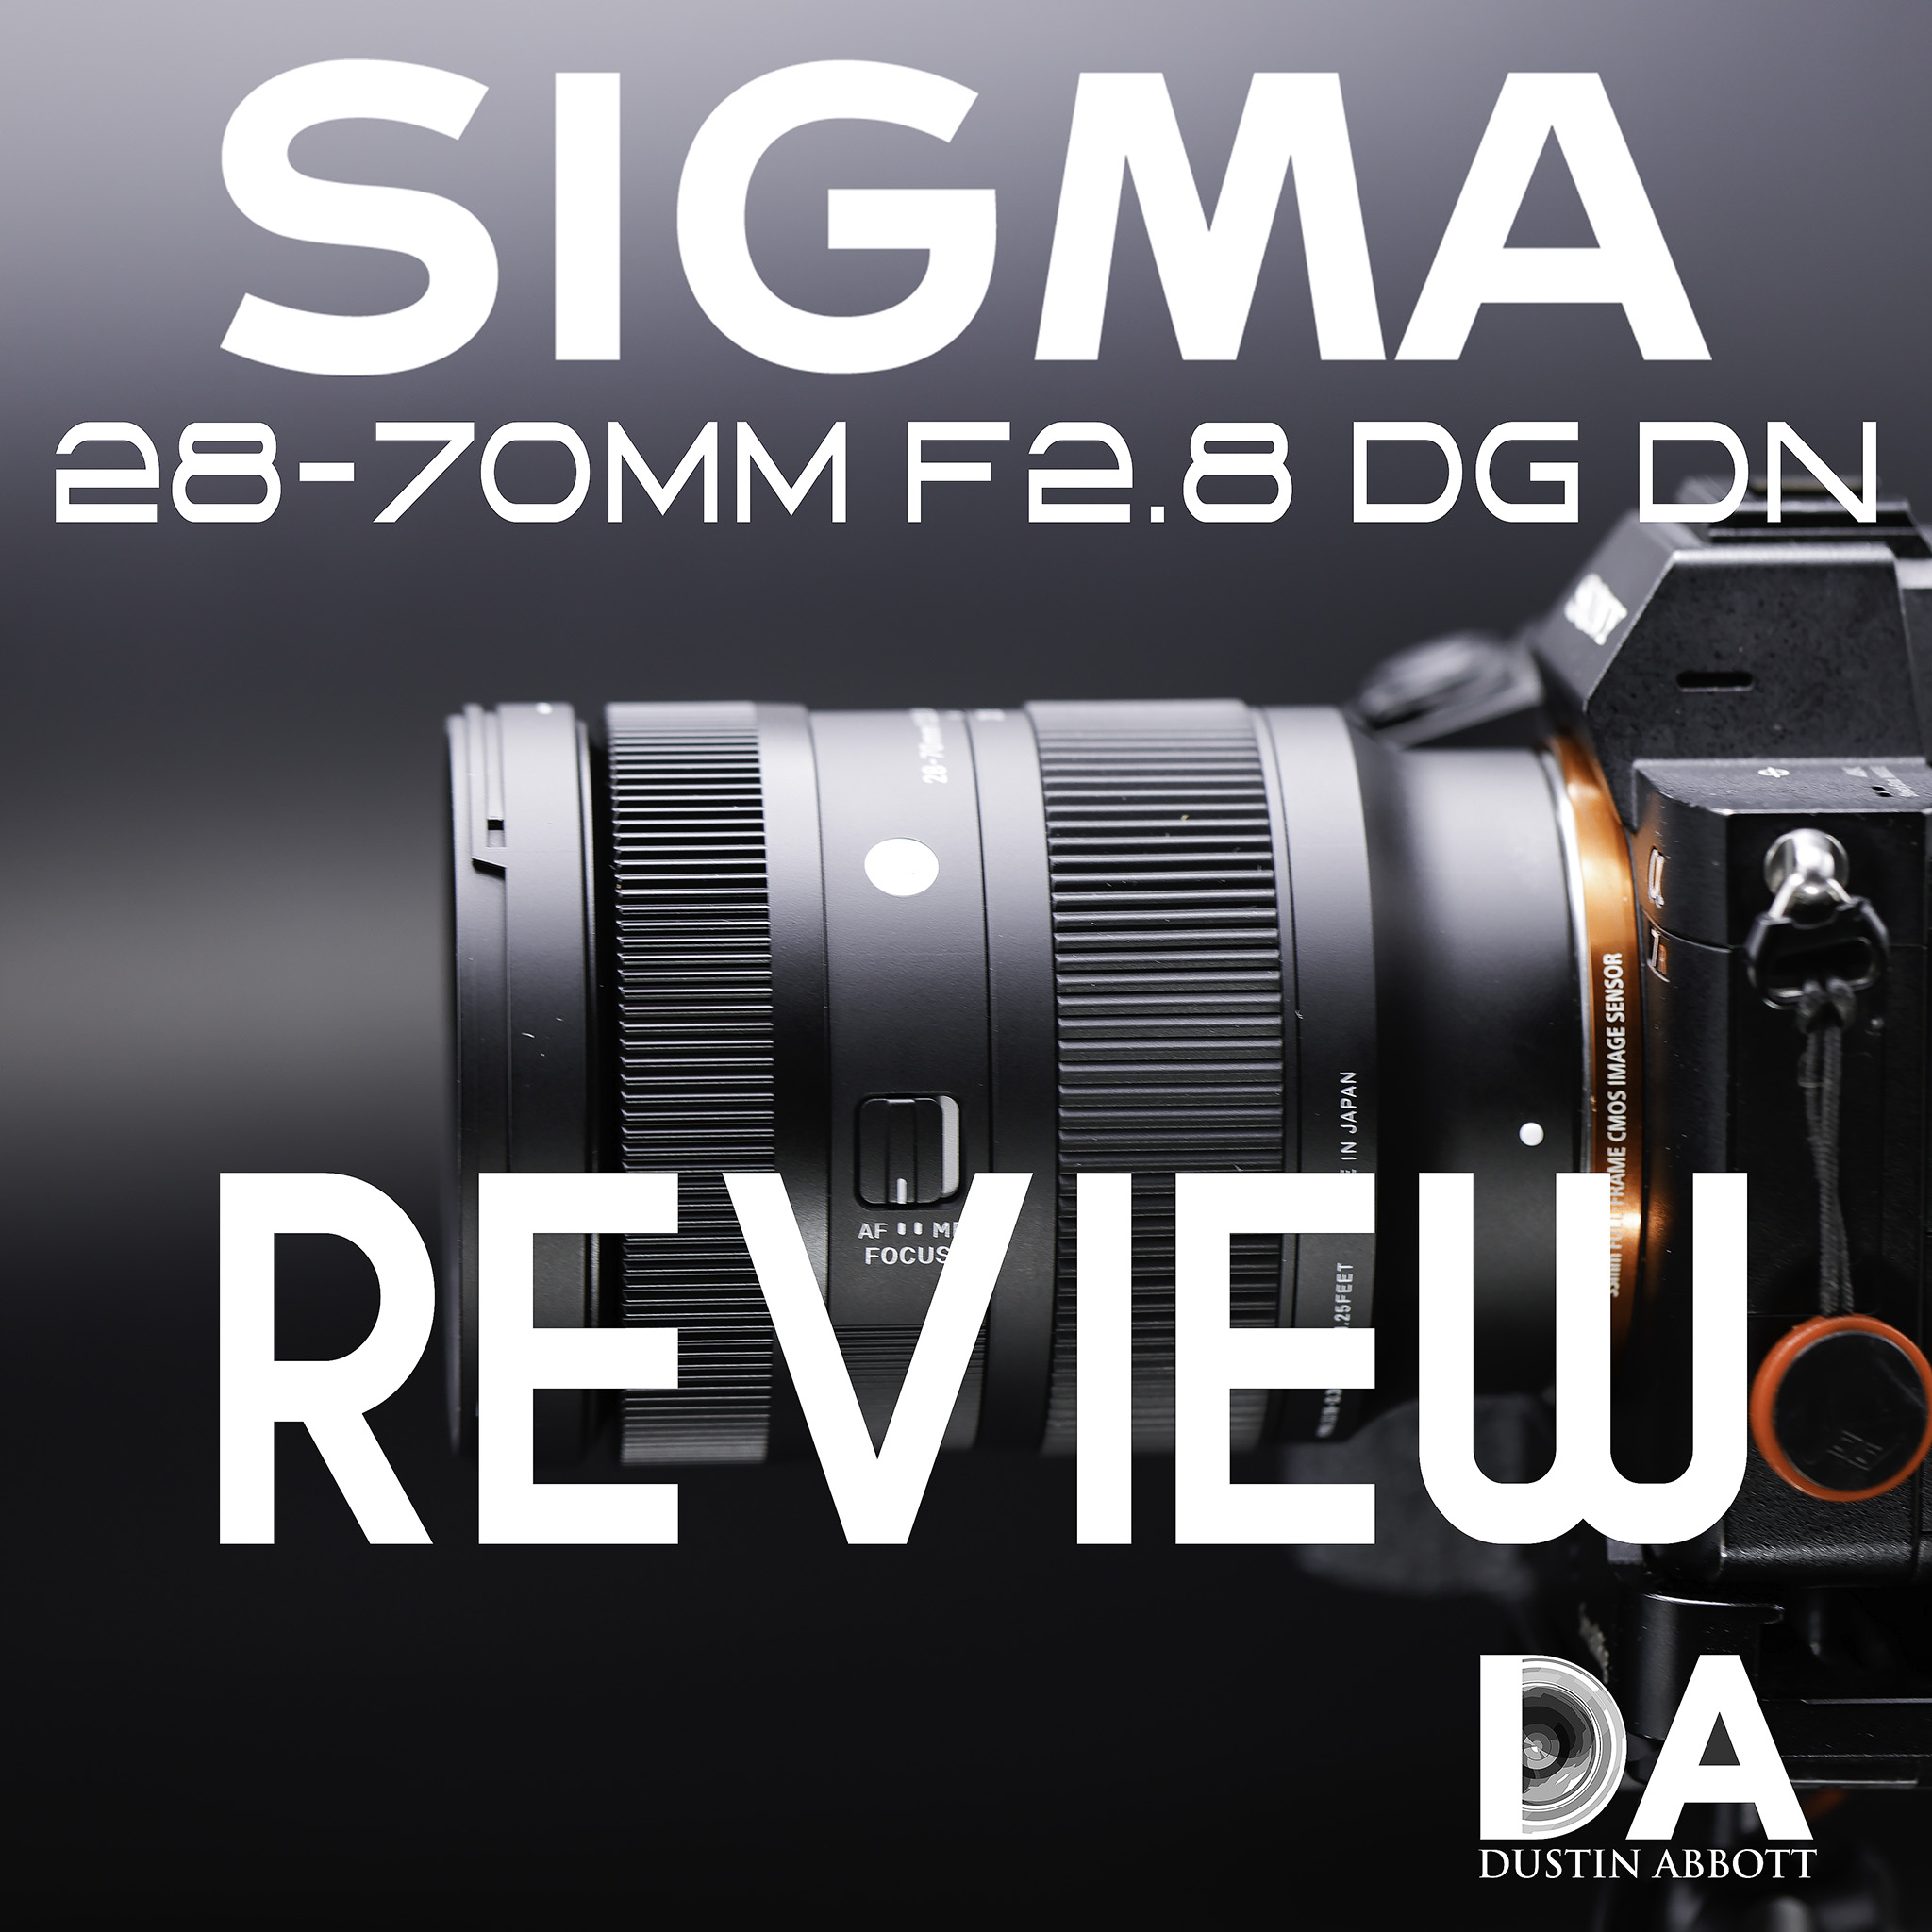 Sigma 28-70mm F2.8 DG DN Review - DustinAbbott.net